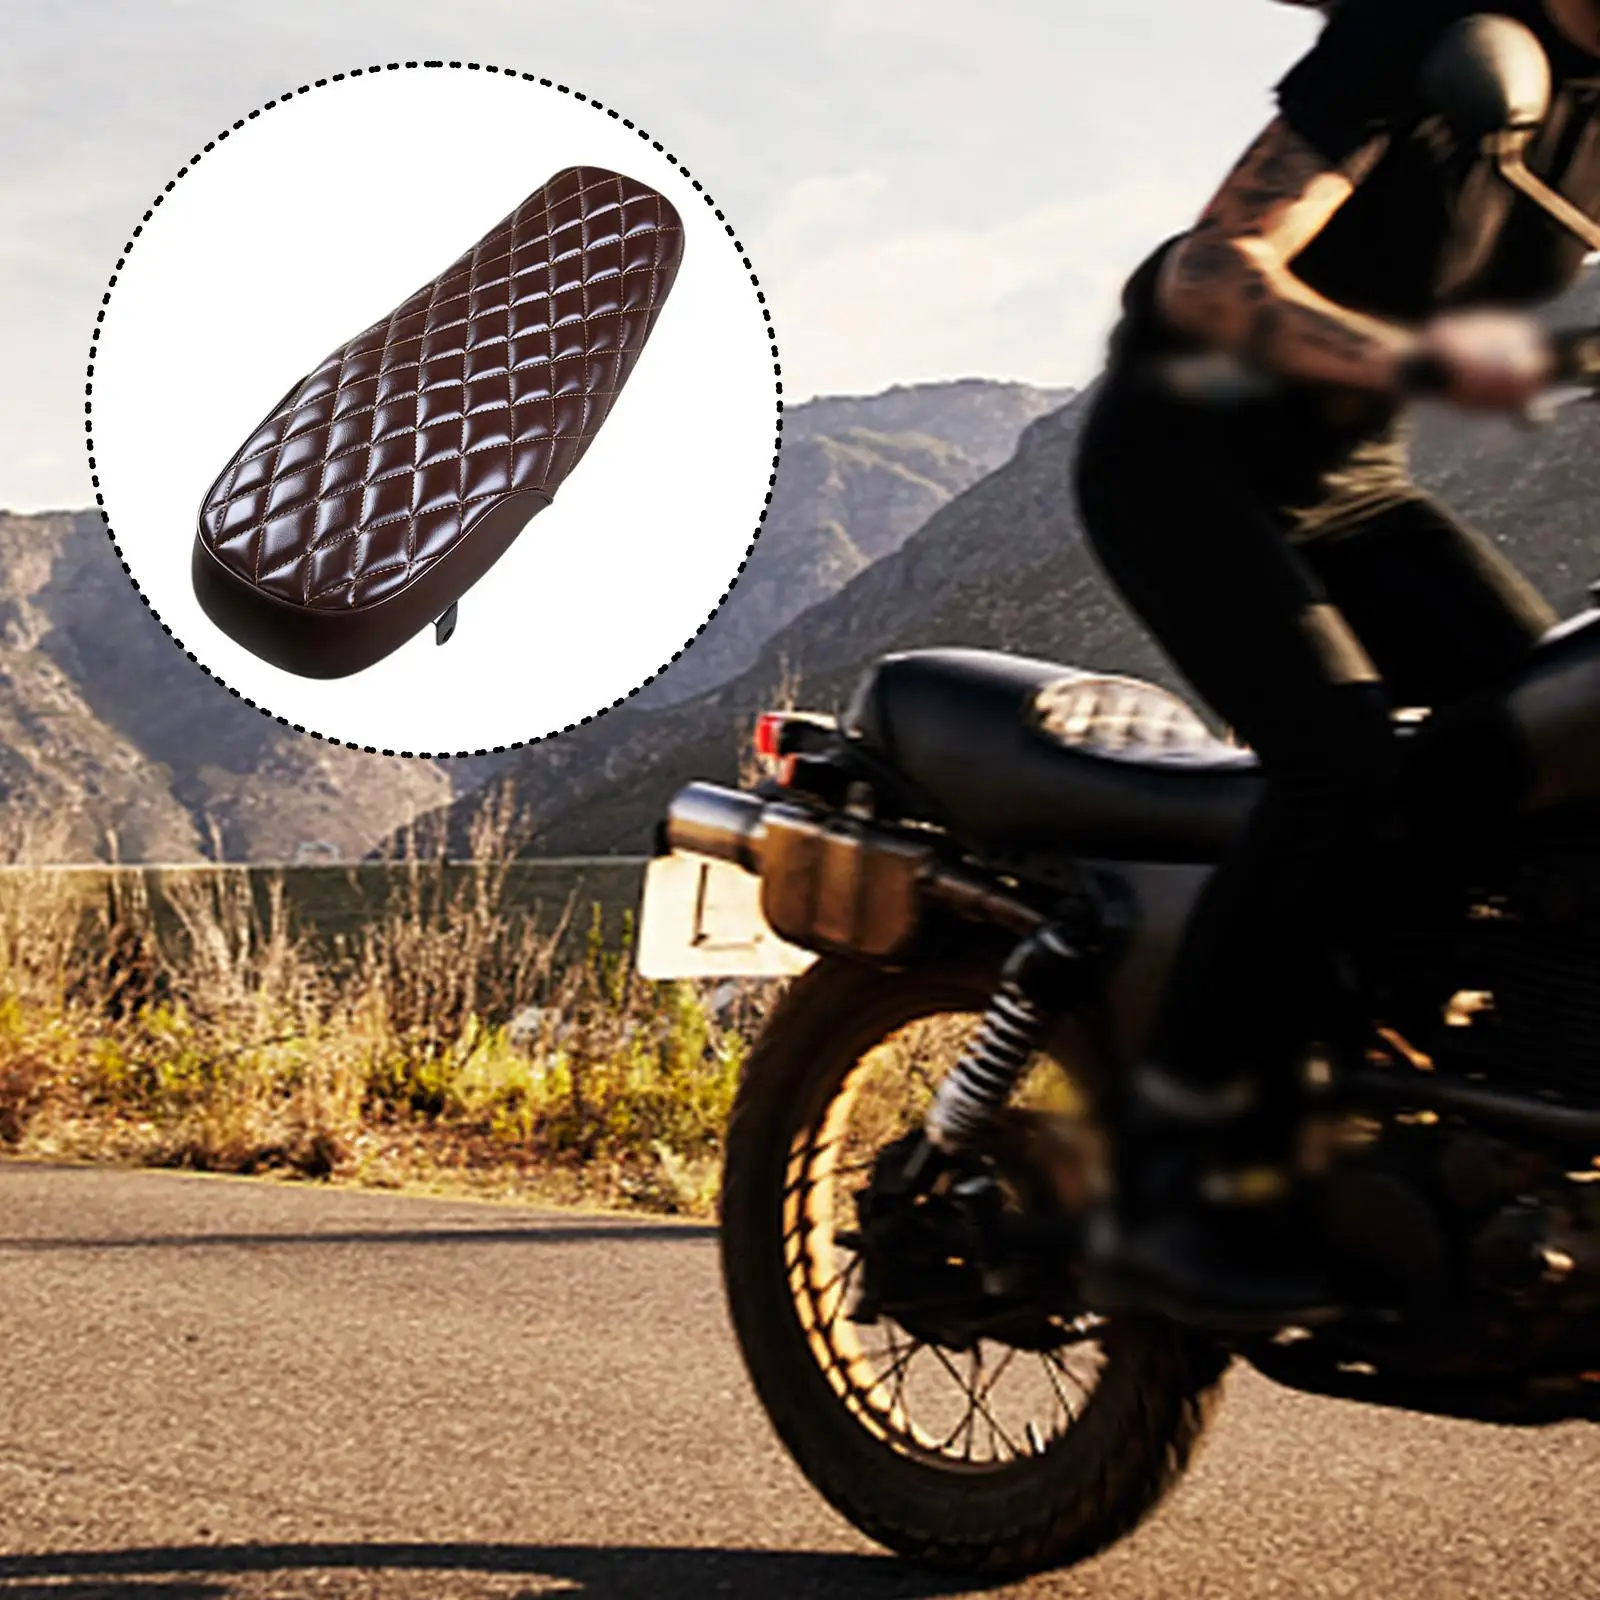 Motorcycle  Seat -Flat Brat Saddle Cushion (Brown)Car Accessories